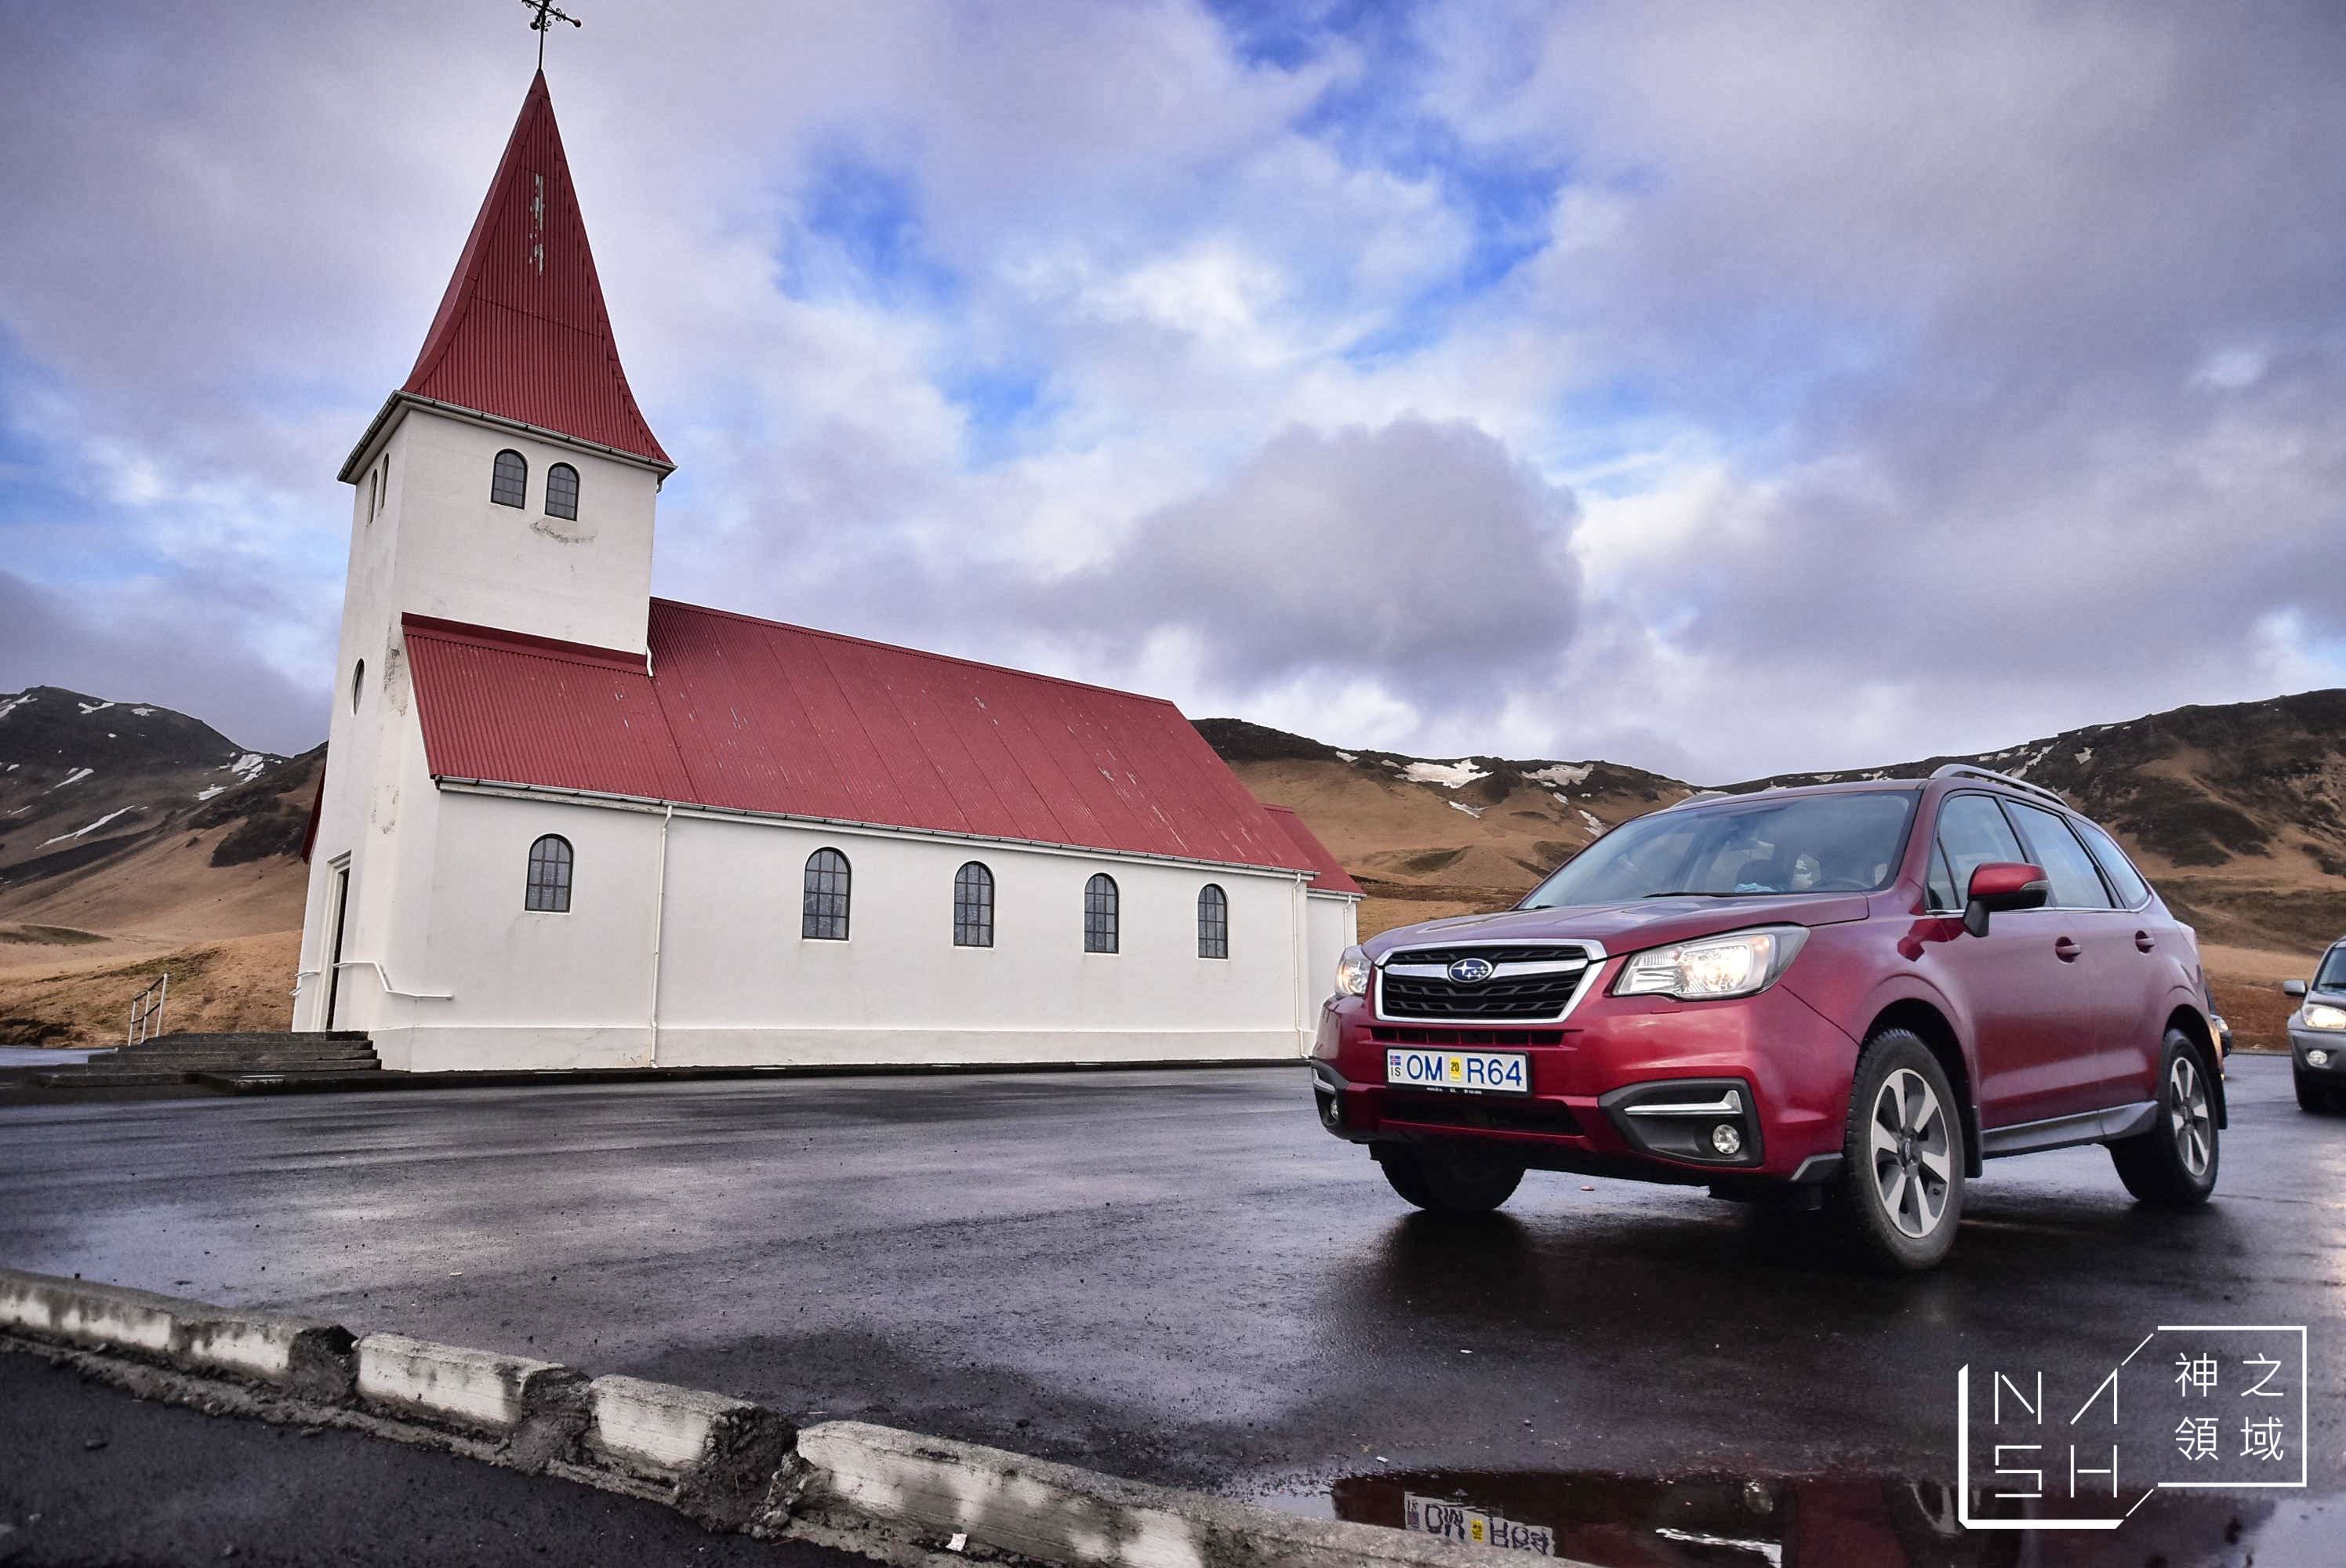 vik church,Vik i Myrdal Church,冰島自由行環島景點推薦,冰島自助景點推薦,維克教堂 @Nash，神之領域